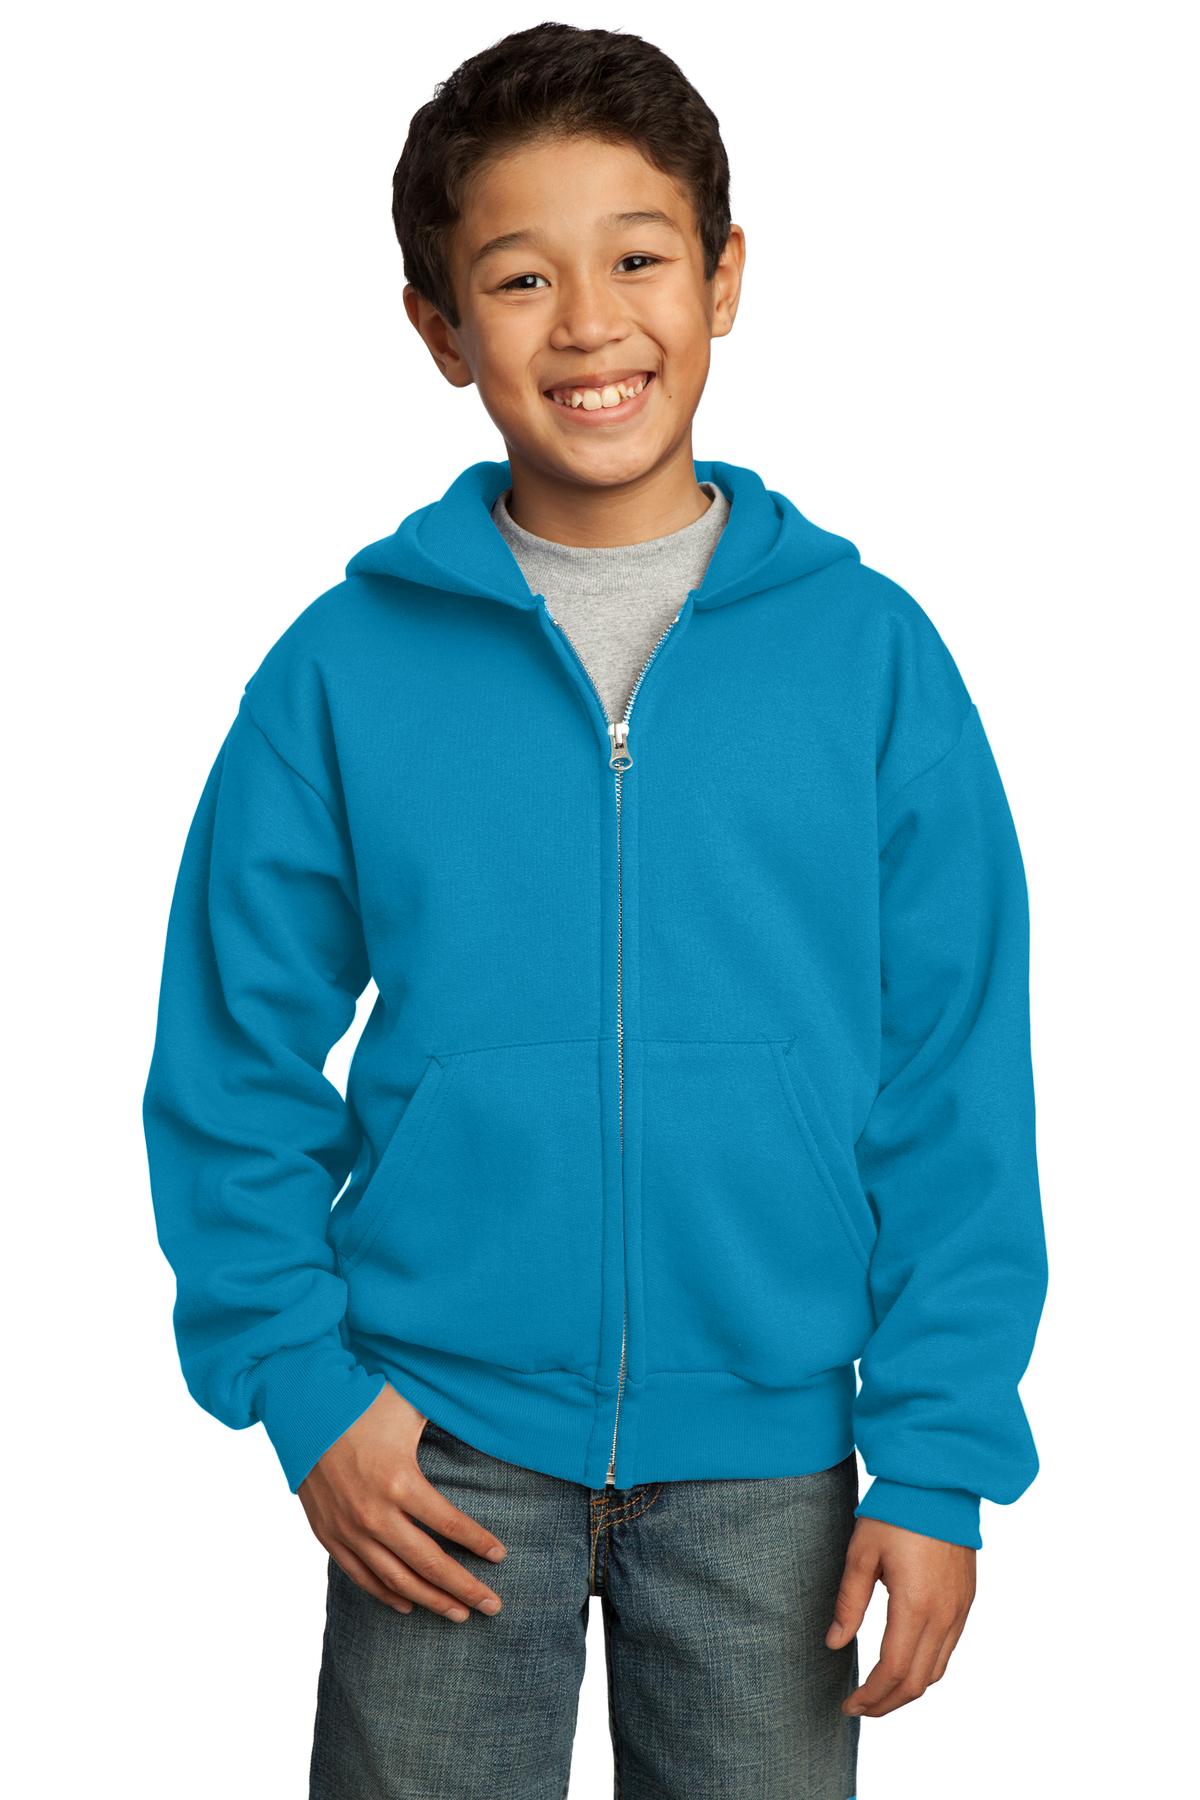 Sweatshirts/Fleece Neon Blue Port & Company